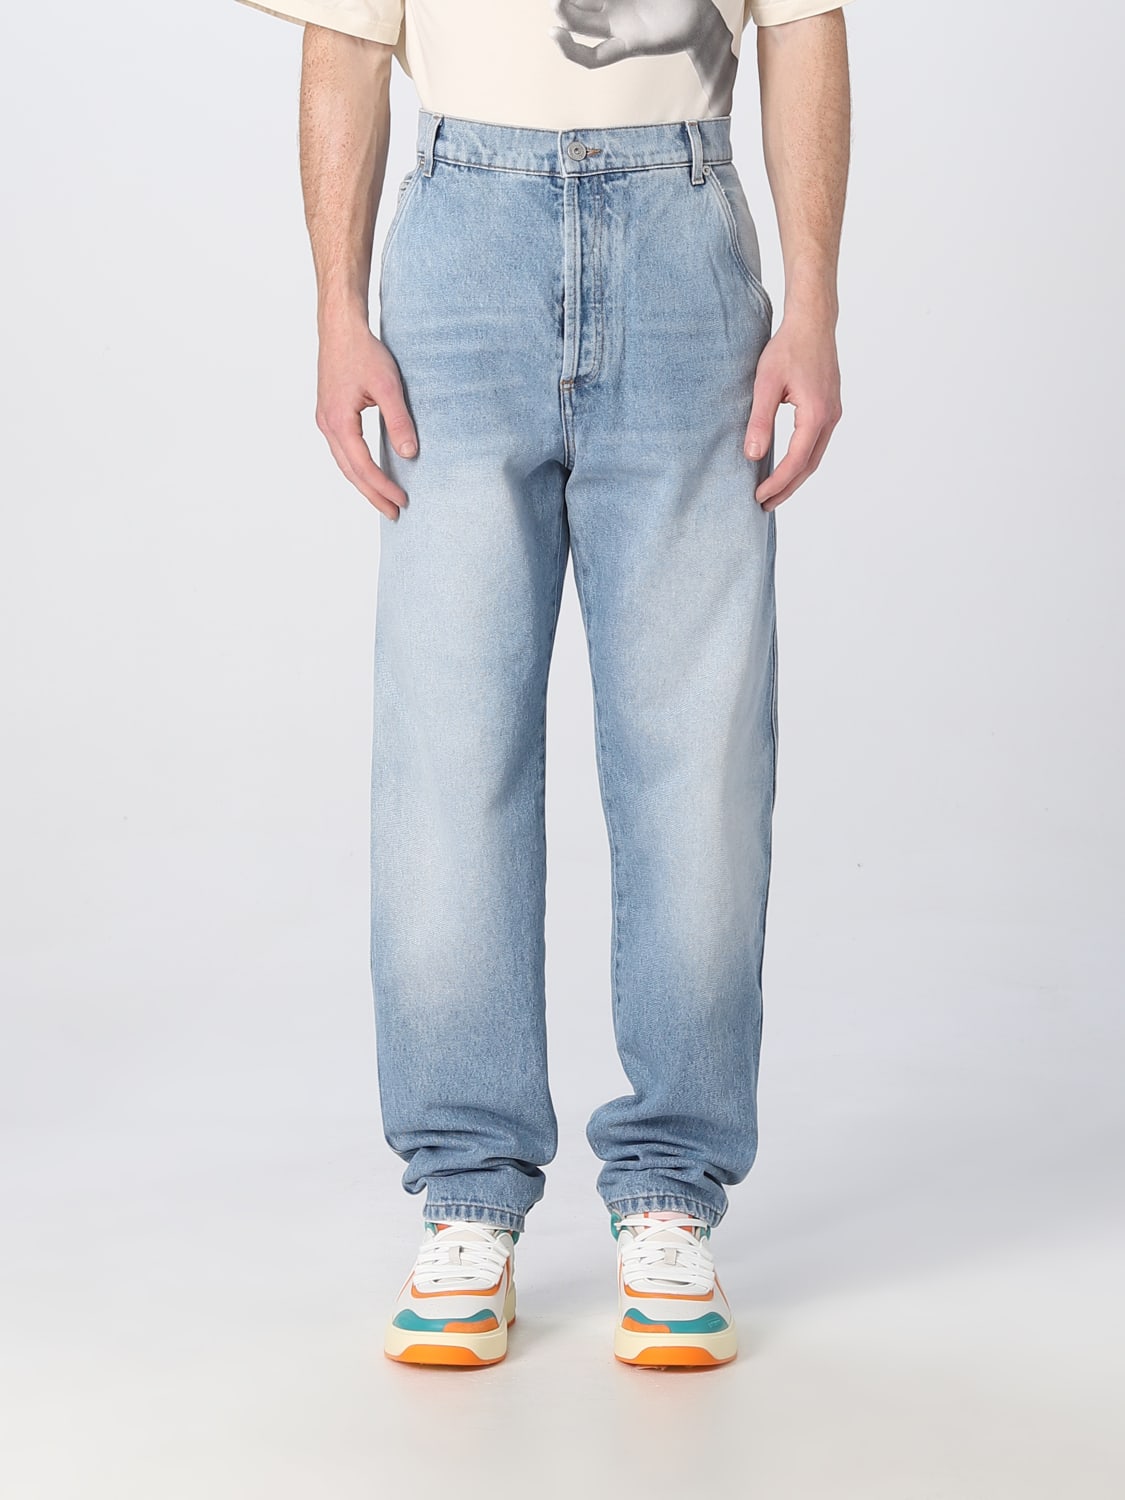 Oh Bug Ciro Balmain Outlet: denim jeans - Blue | Balmain jeans AH1MM000DD09 online at  GIGLIO.COM